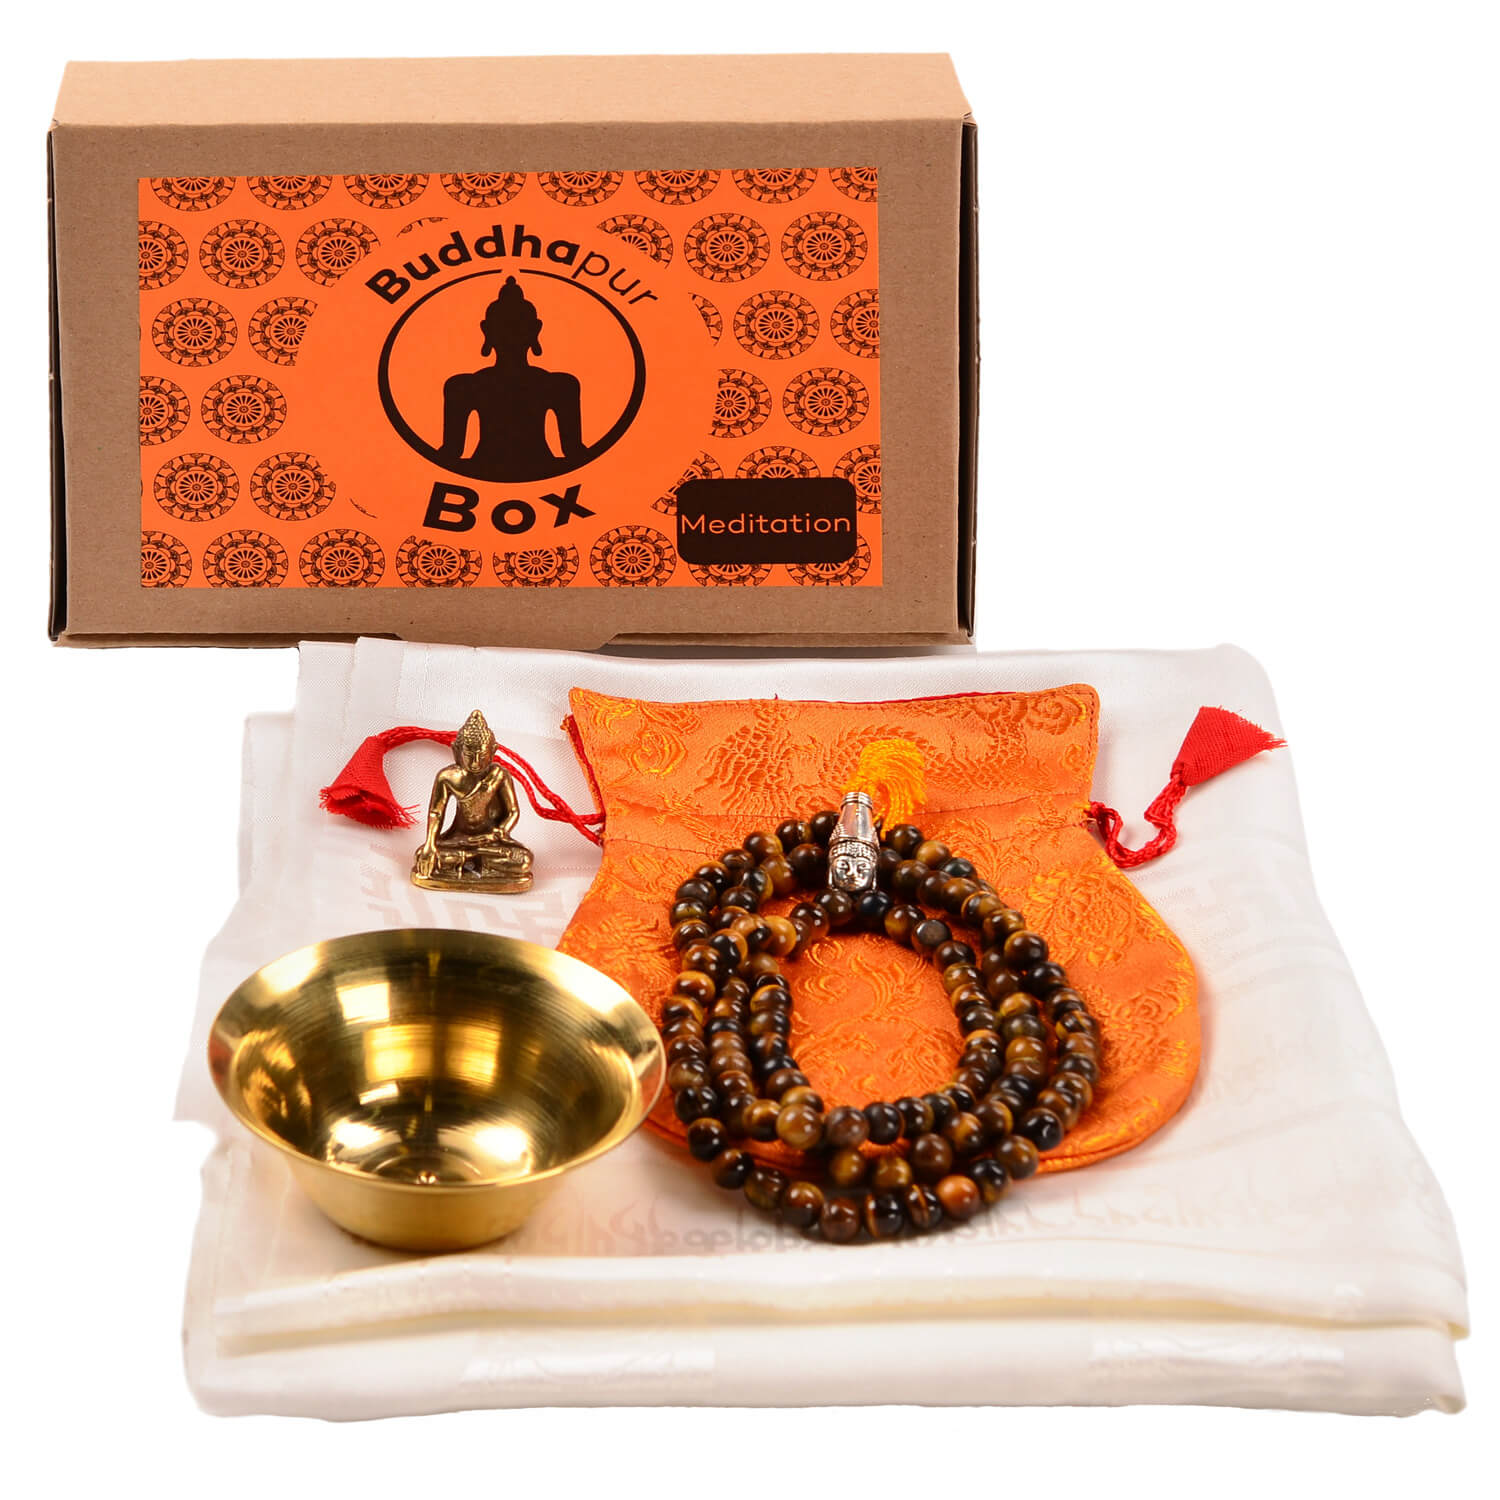 Buddhapur Box Meditation: Inhalt vor Verpackung